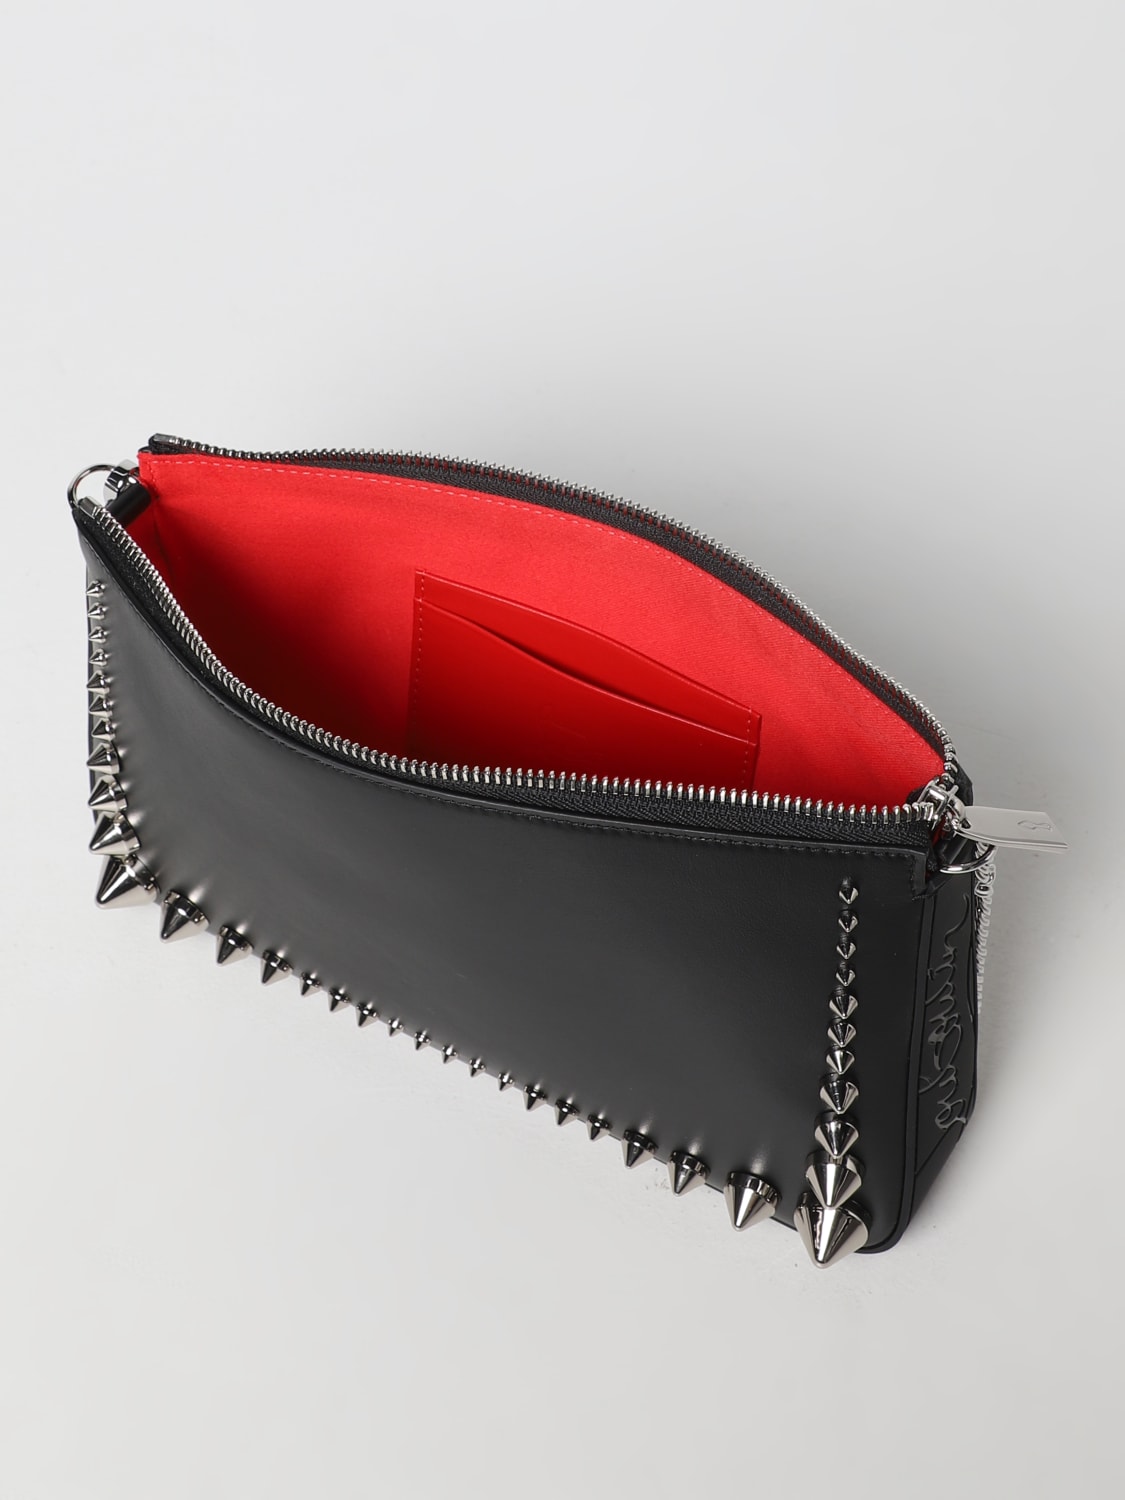 Loubila - Shoulder bag - Calf leather, rubber and spikes - Ole - Christian  Louboutin